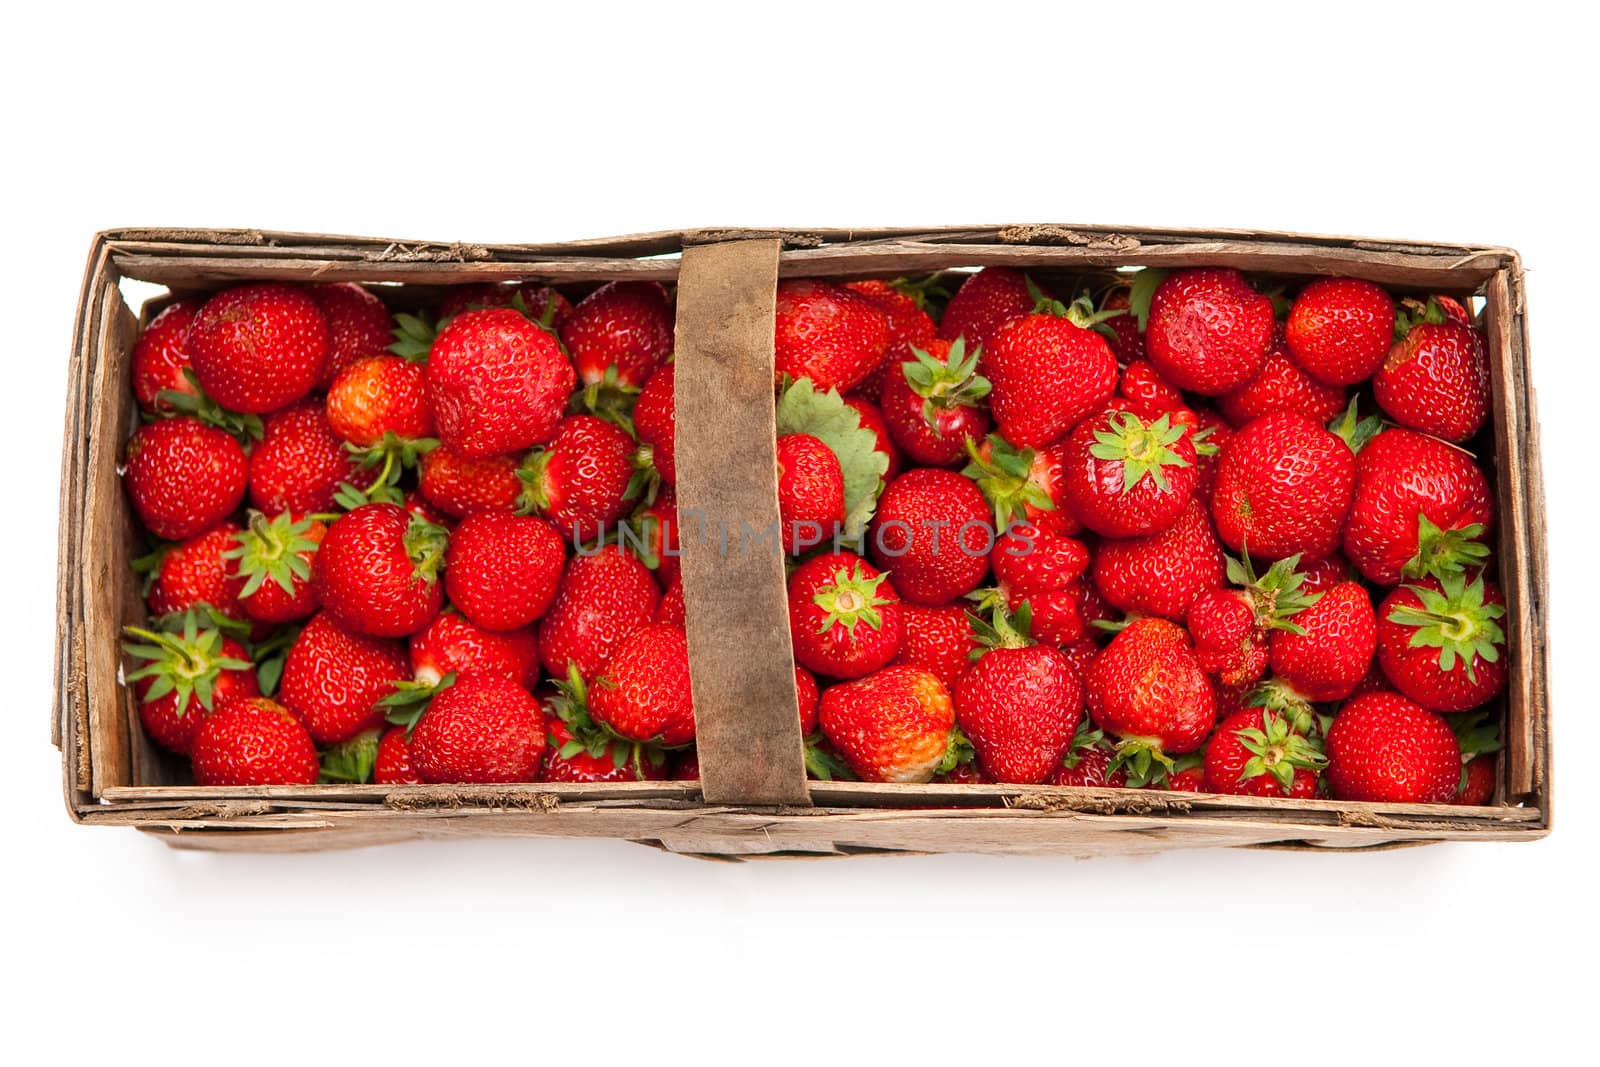 Fresh strawberries in the wicker basket